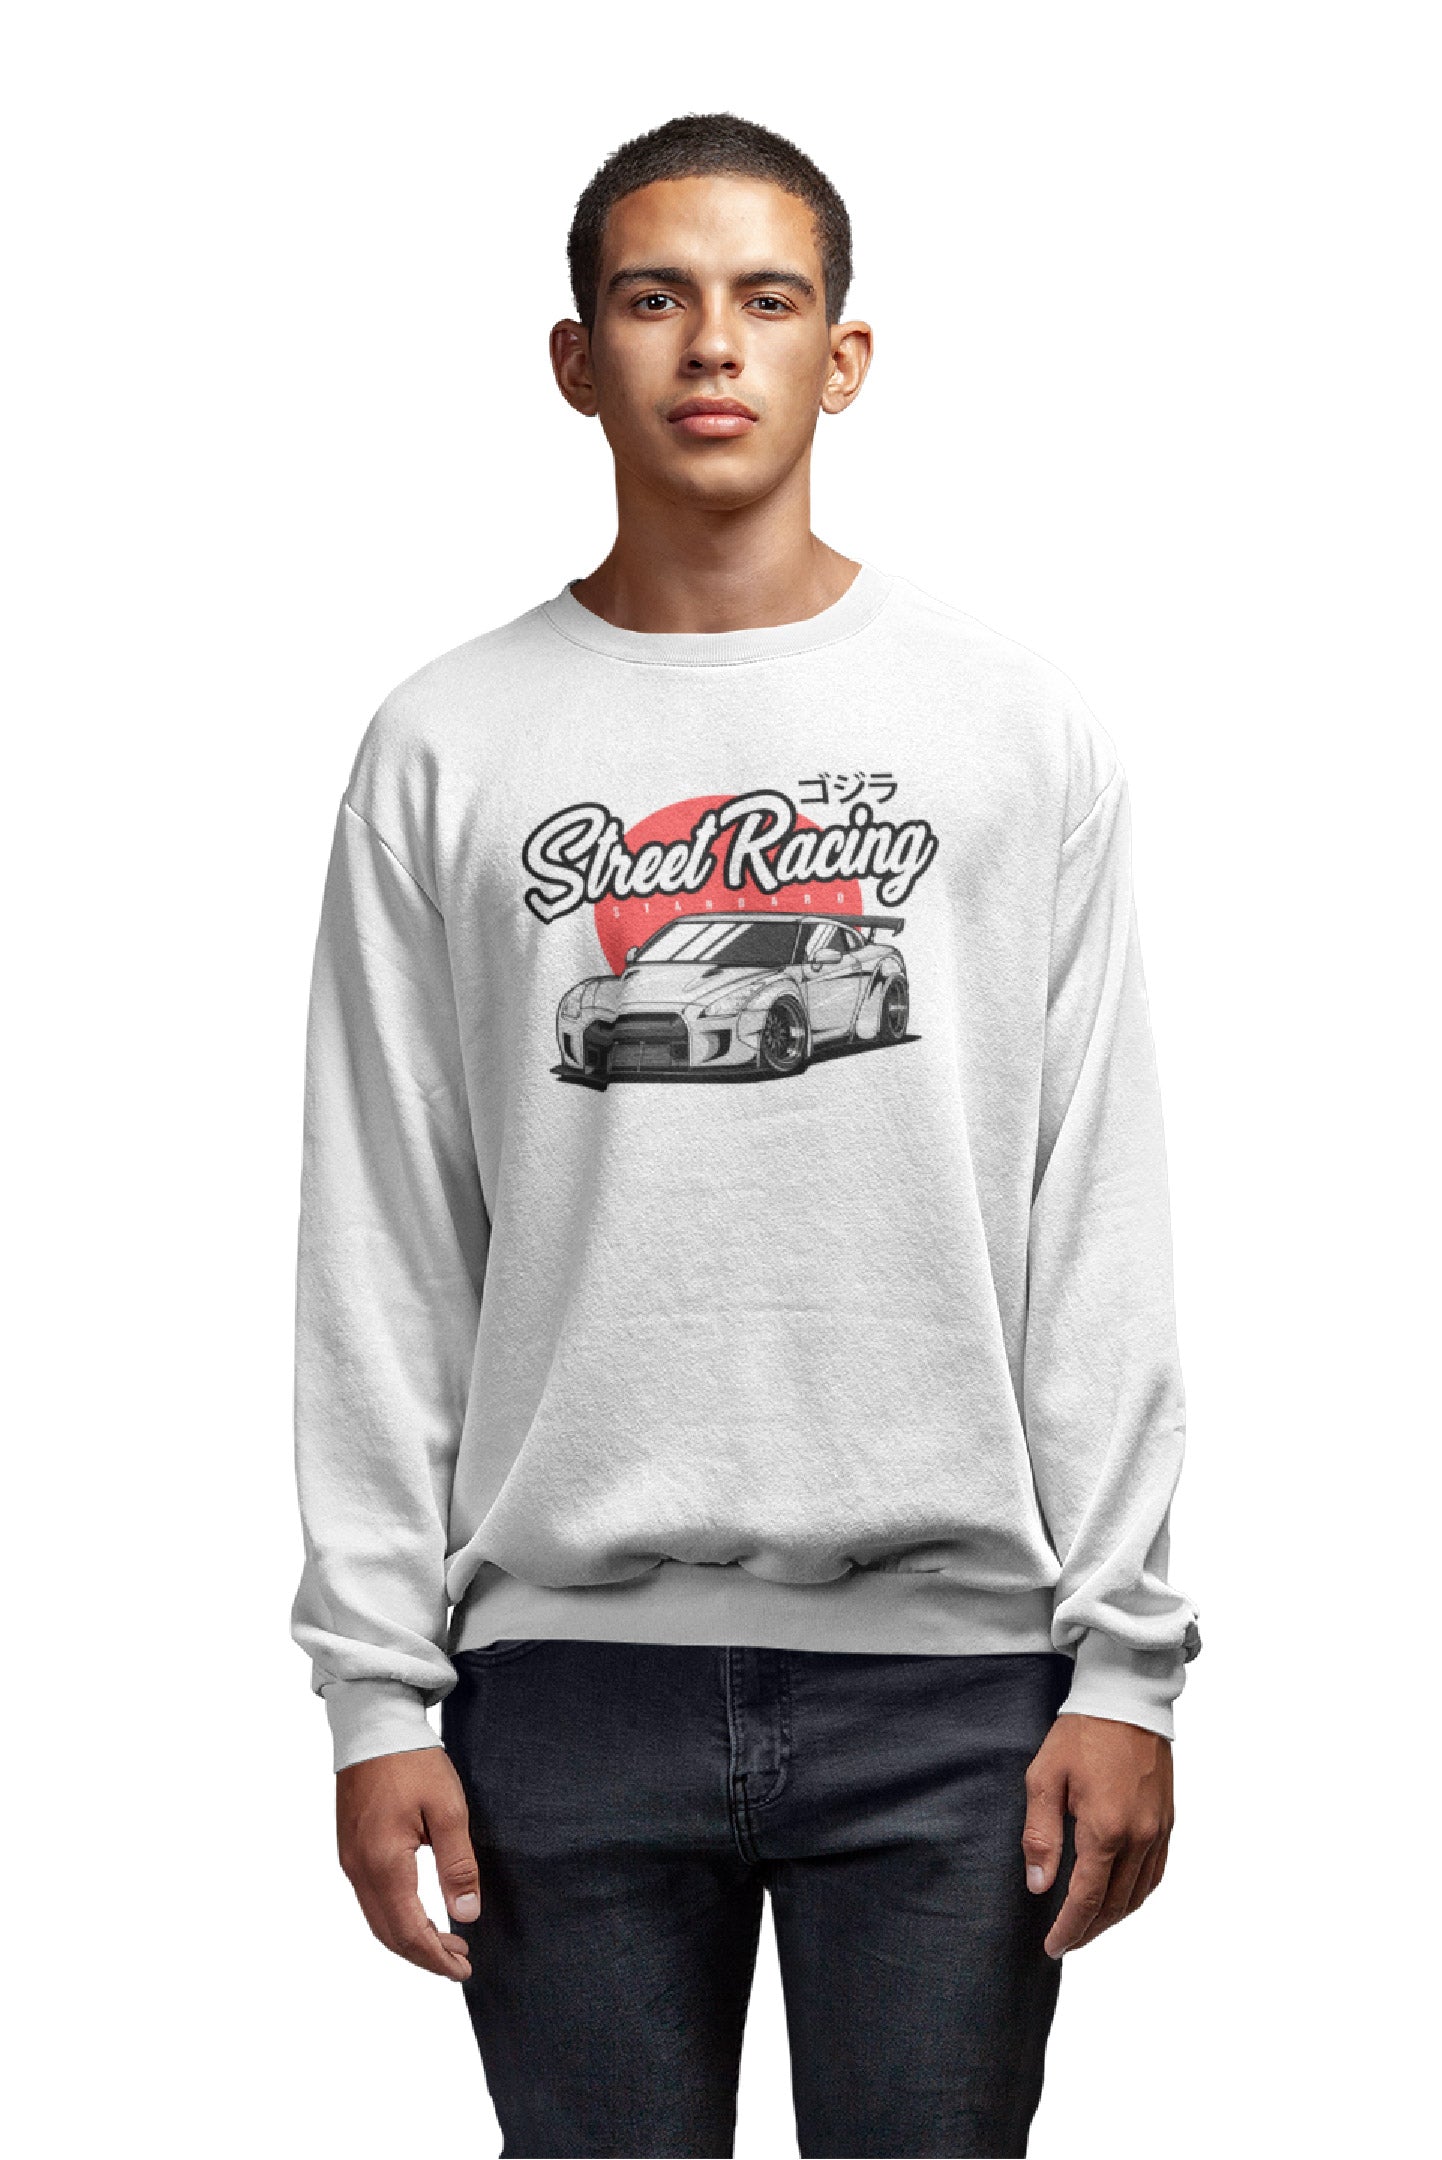 Street Racing - Unisex Sweatshirt